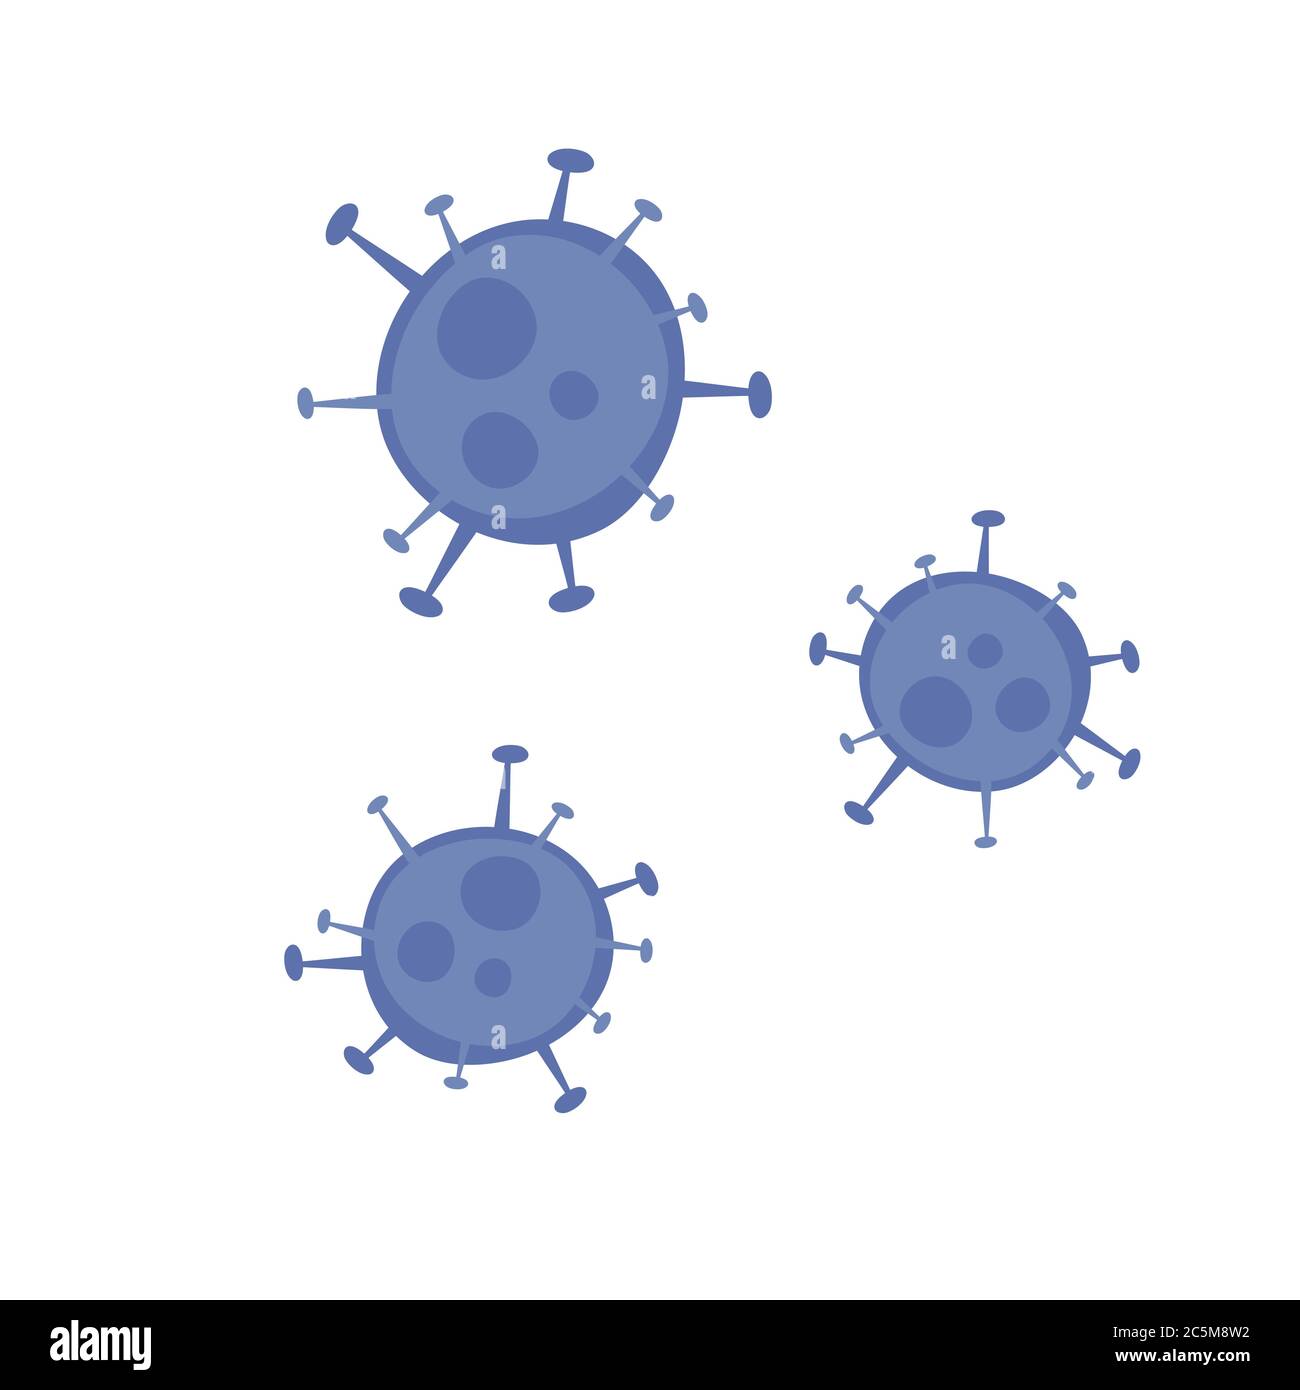 Coronavirus 2019-nCoV. Corona-Virus-Symbol. Schwarz auf rotem Hintergrund isoliert. China Pathogen Atemwegsinfektion (Asian Grippeausbruch). Vektor Stock Vektor